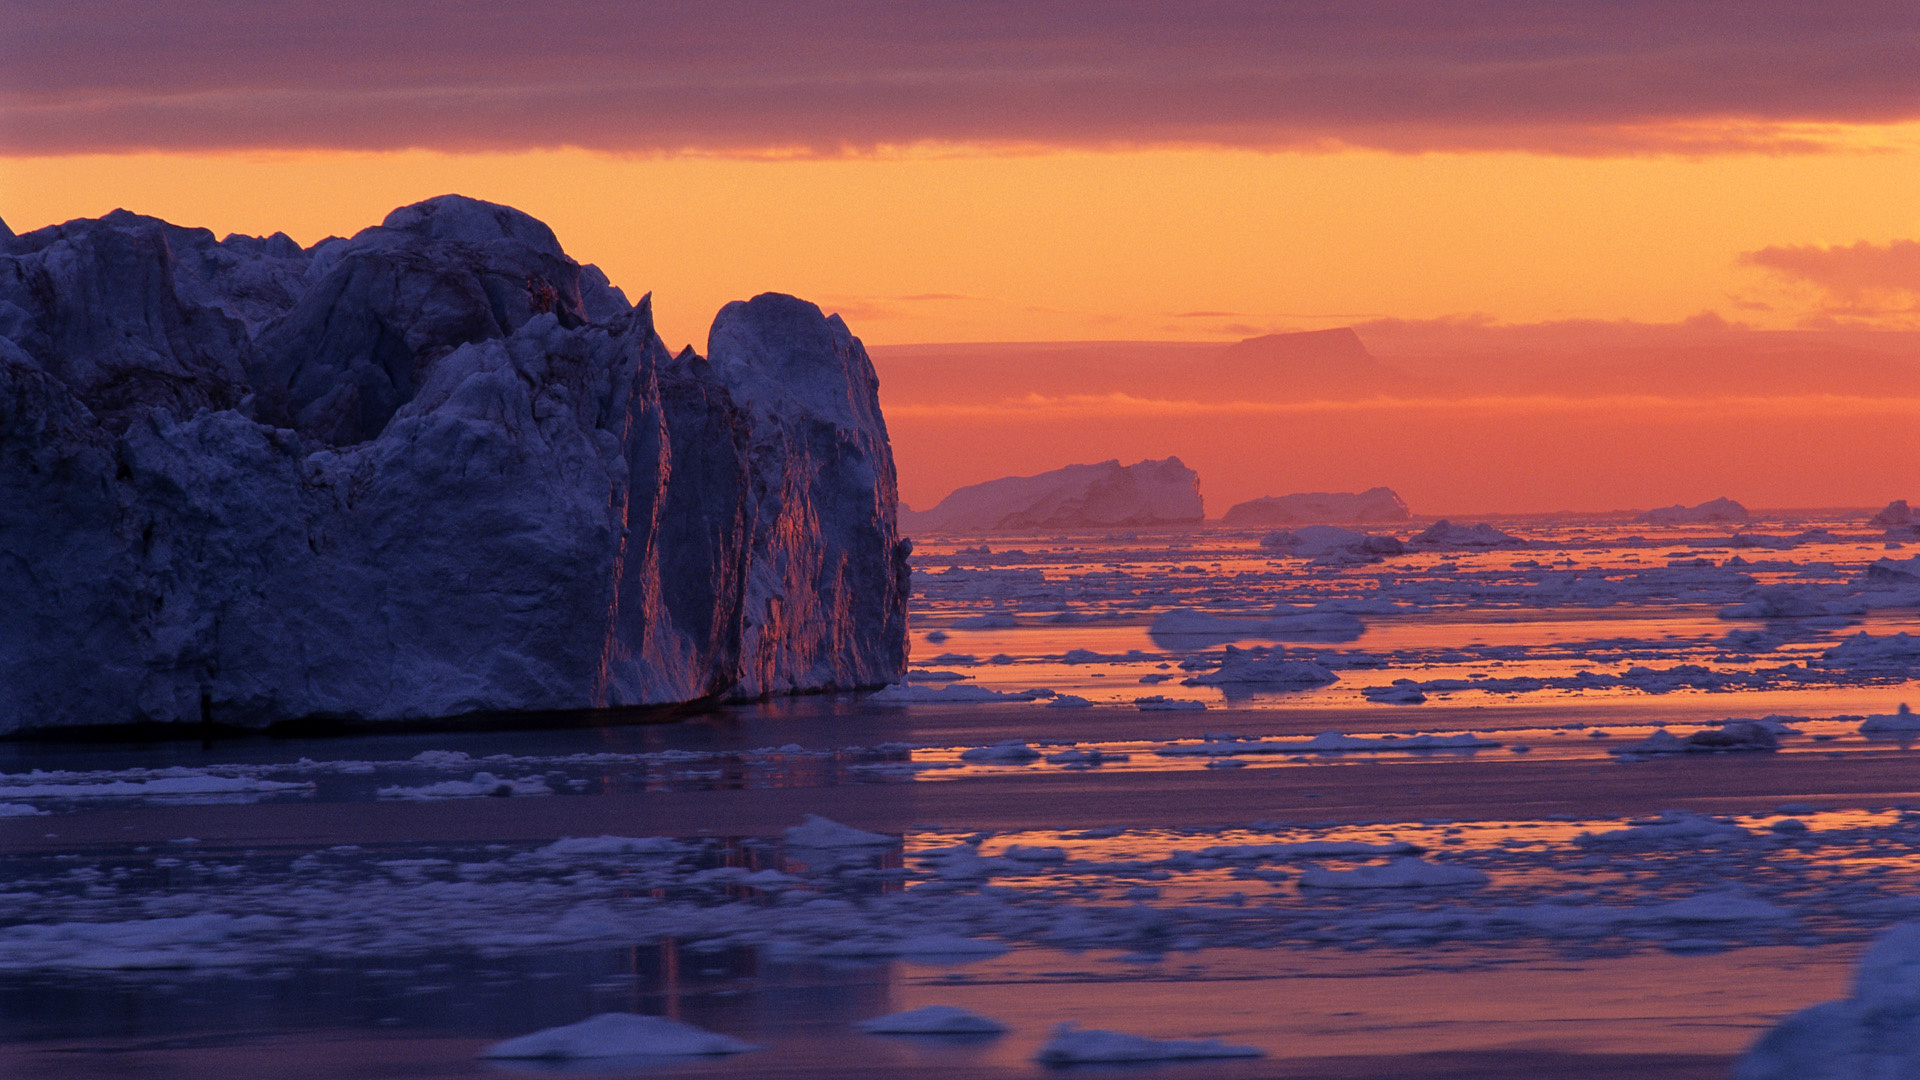 Greenland: Icebergs, Disko Bay, The island was recolonized by Denmark in 1721. 1920x1080 Full HD Wallpaper.